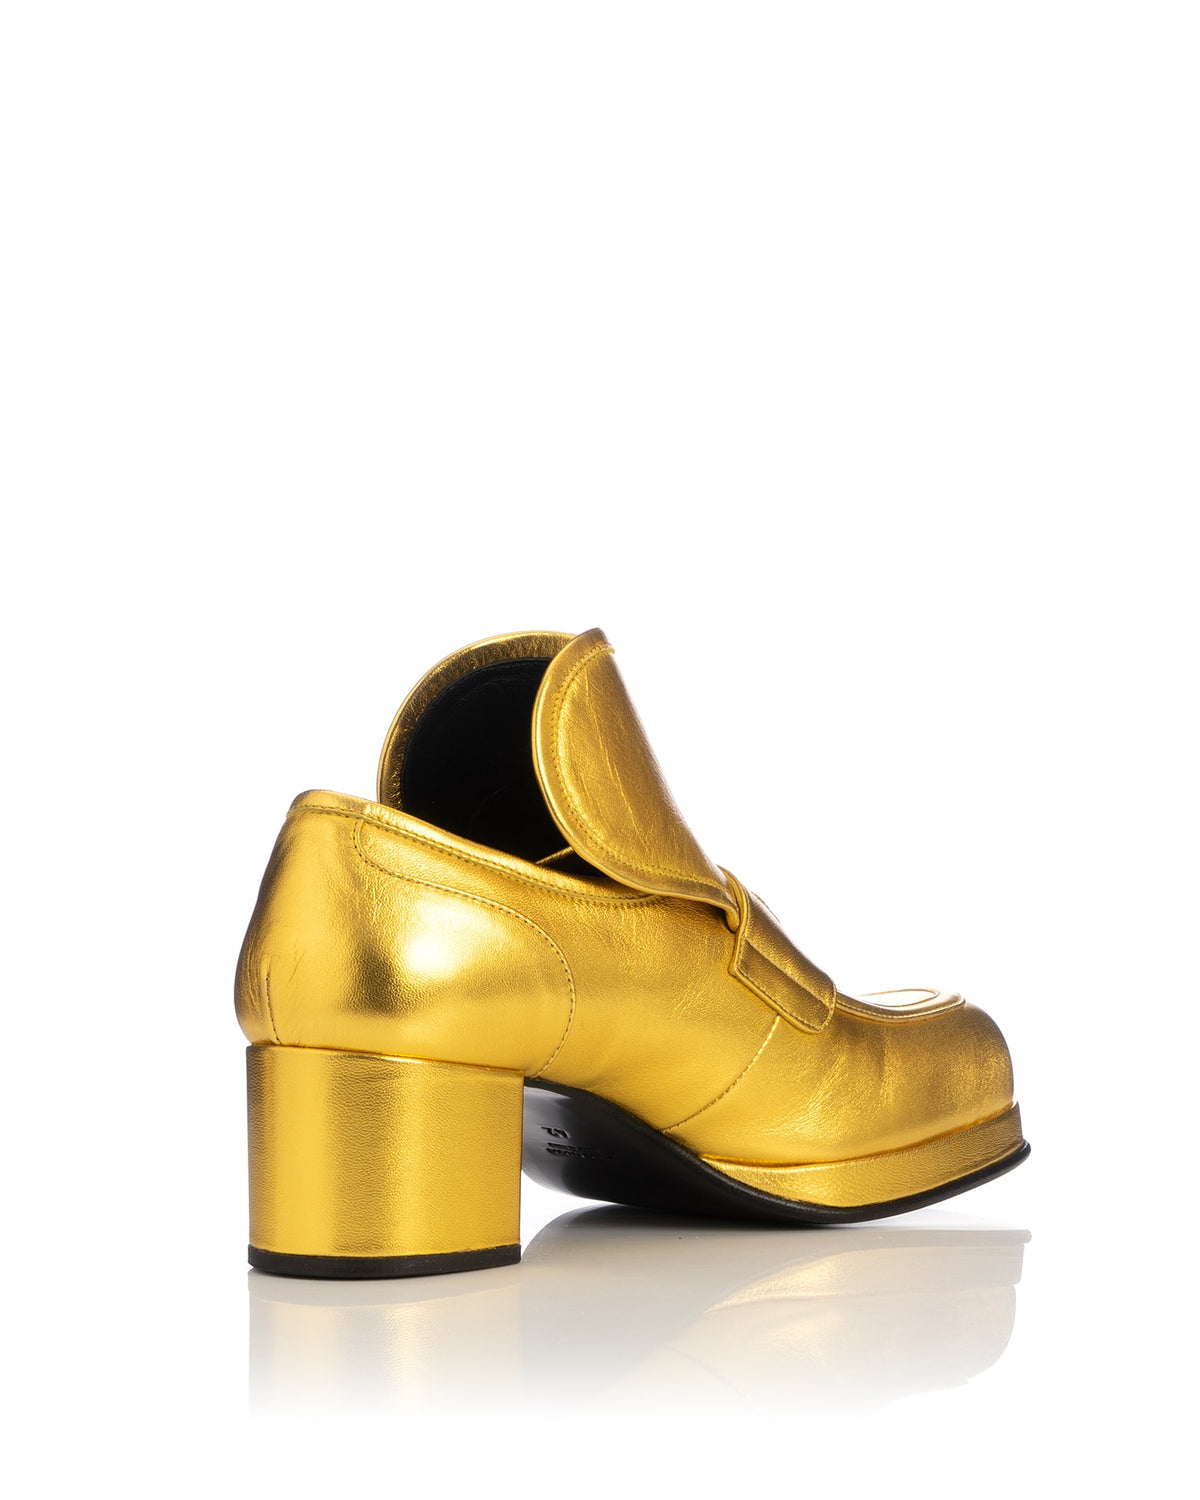 Walter Van Beirendonck | Love Shoes Gold - Concrete